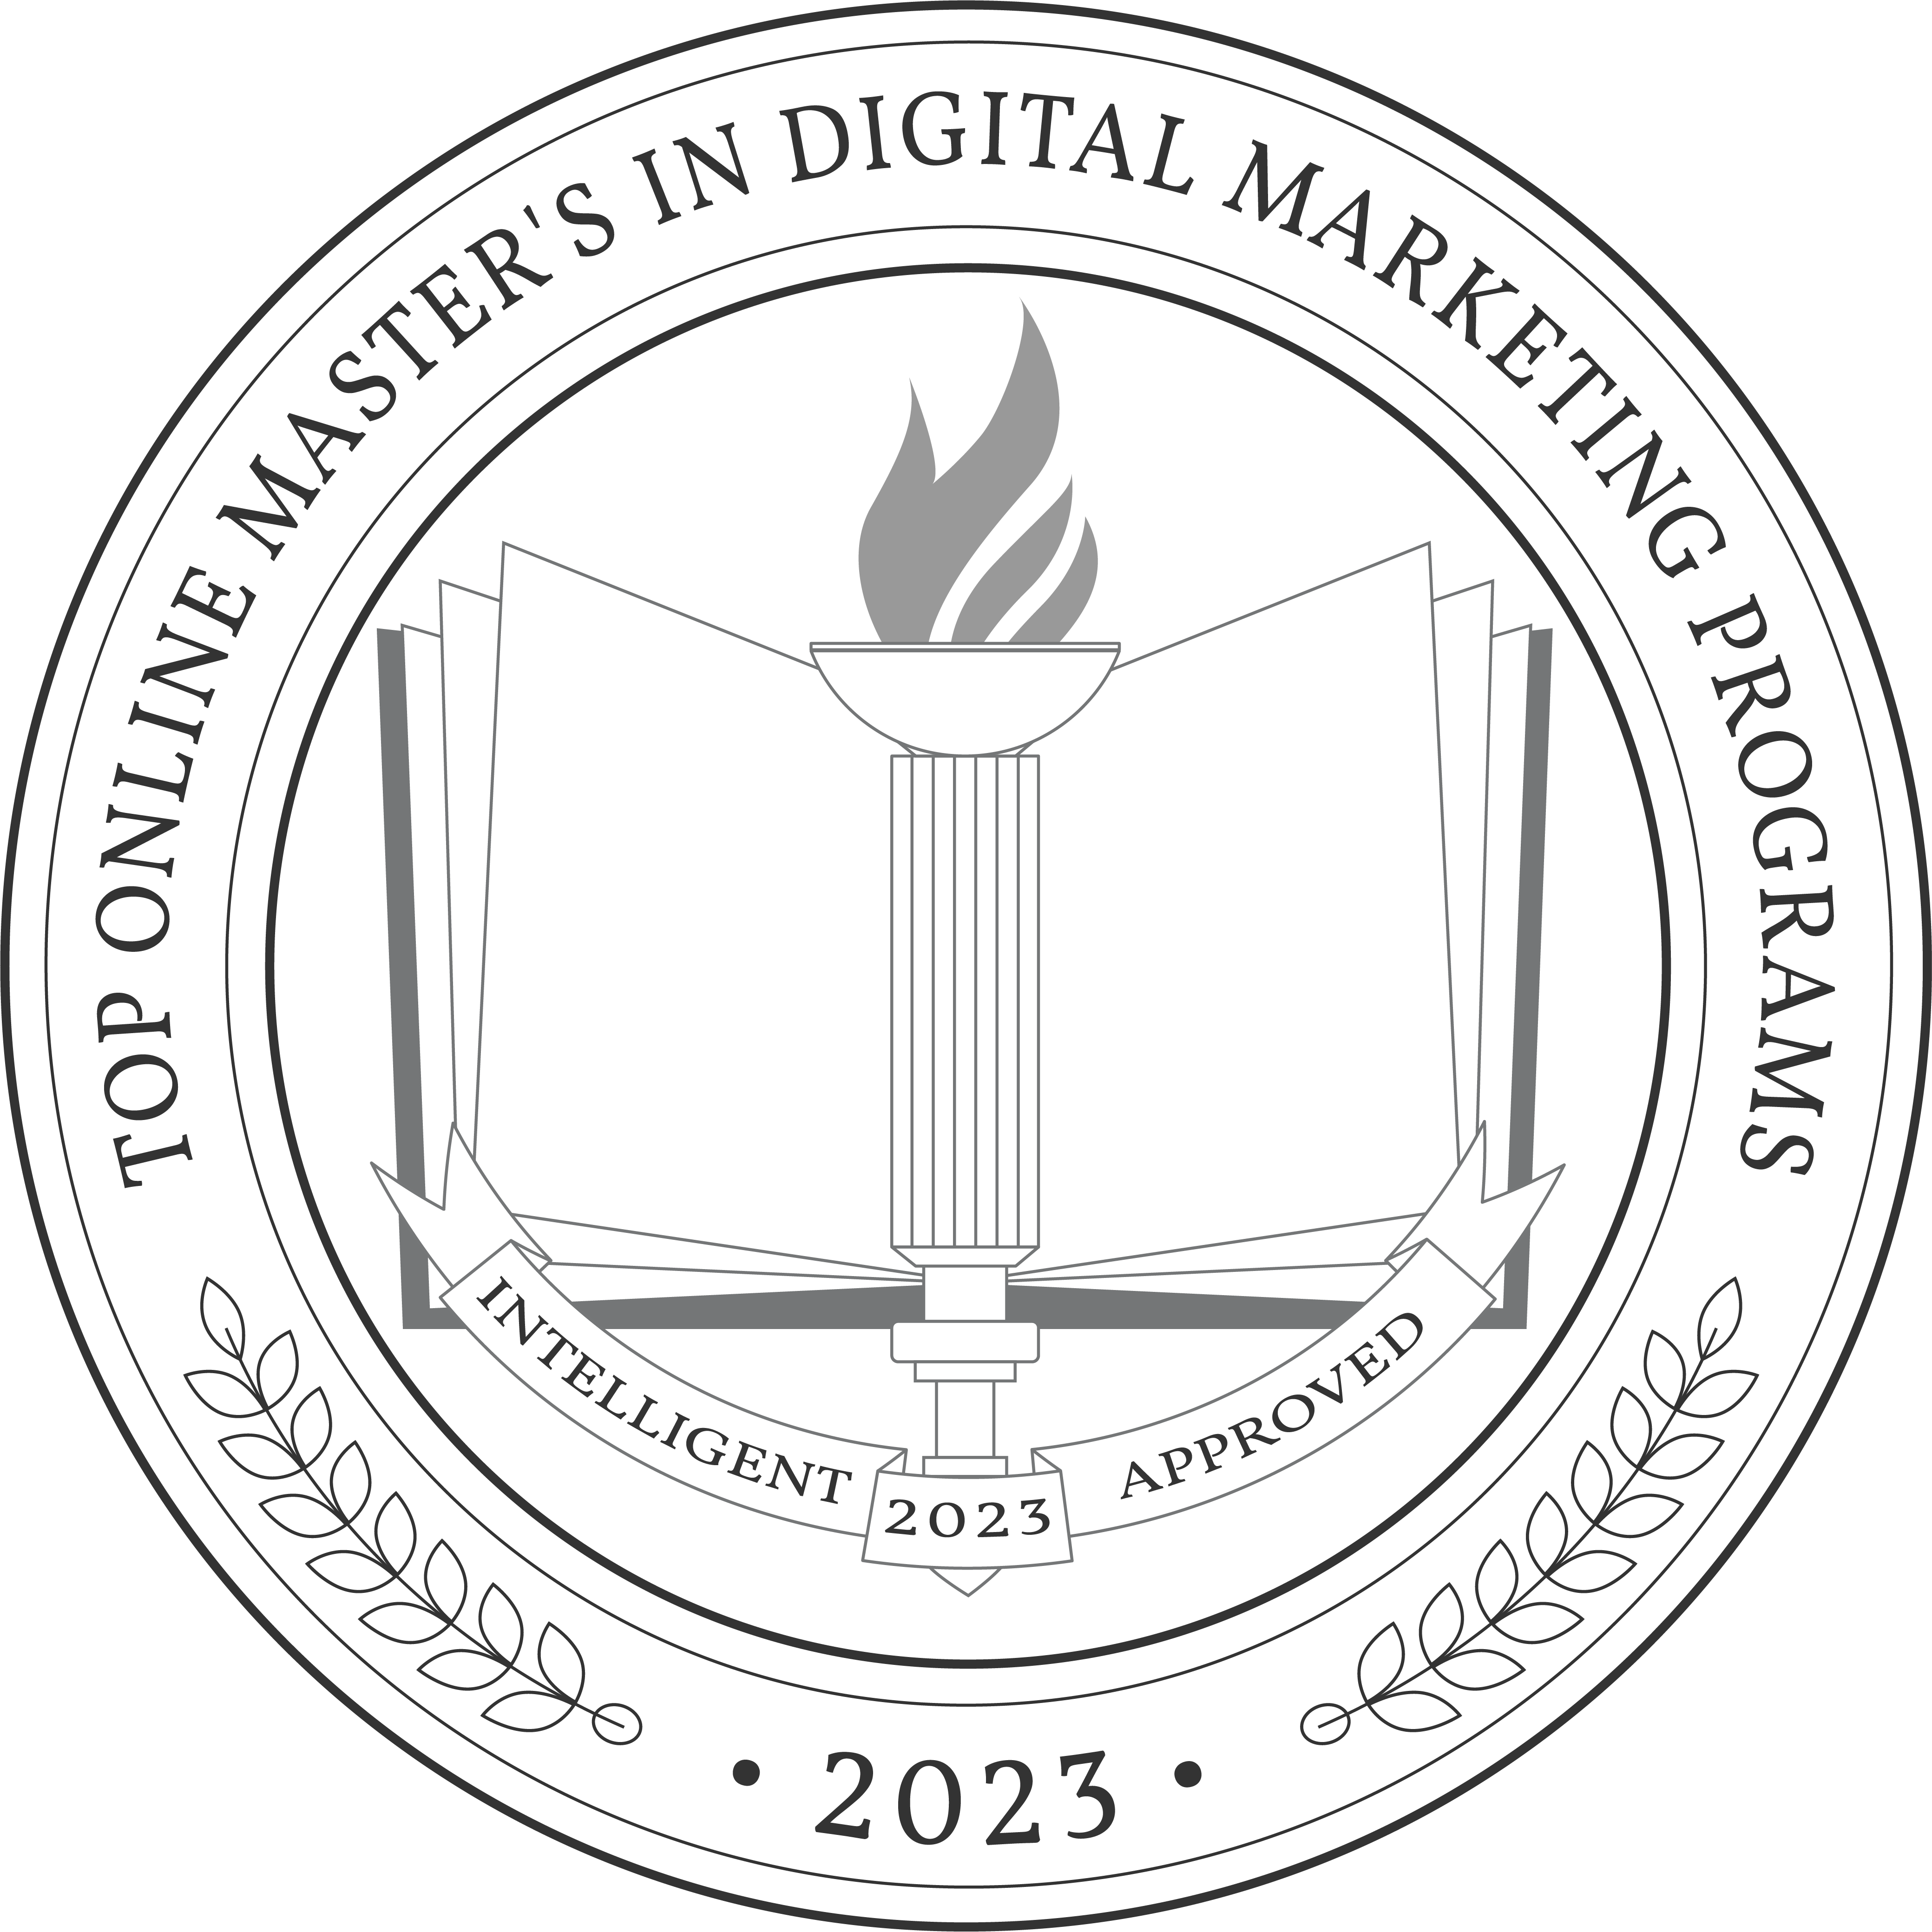 Top Online Master's in Digital Marketing Programs badge